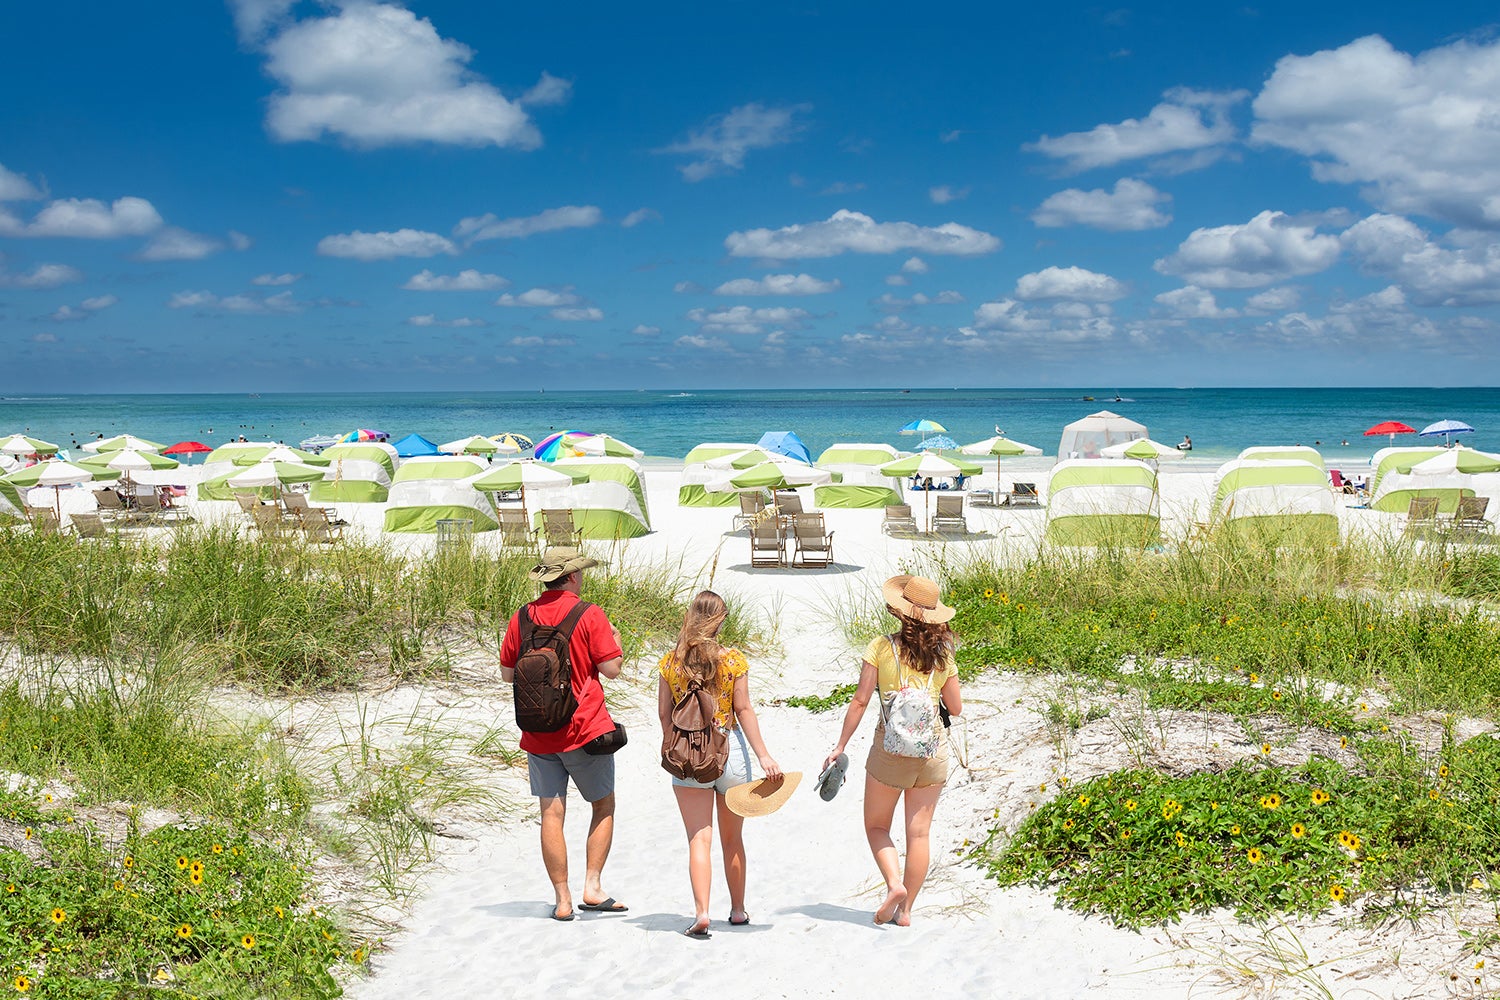 Florida tourists on the beach